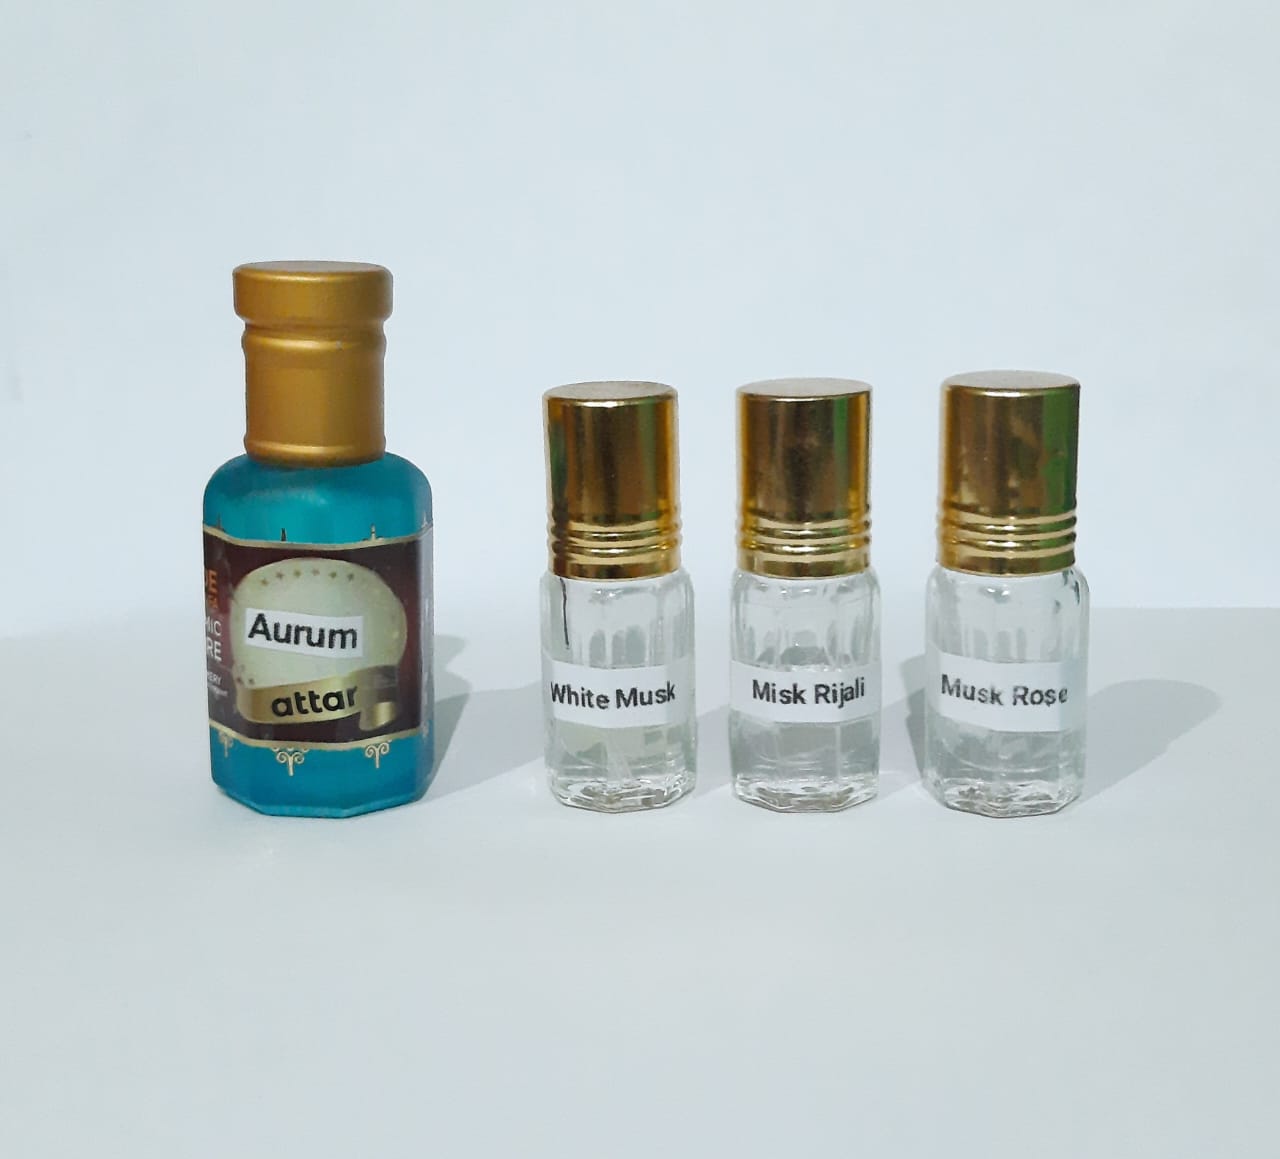 Aurum Attar Premium Quality And Free 3 Samples By Abde Mustafa Store